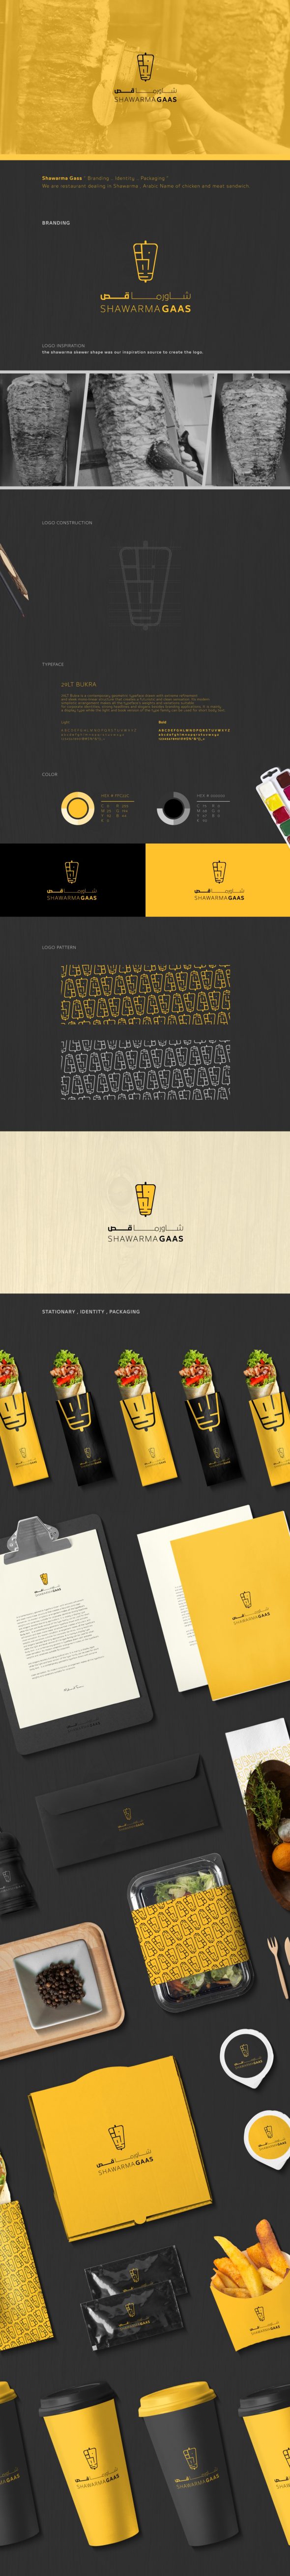 Morden shawarma logo icon and branding